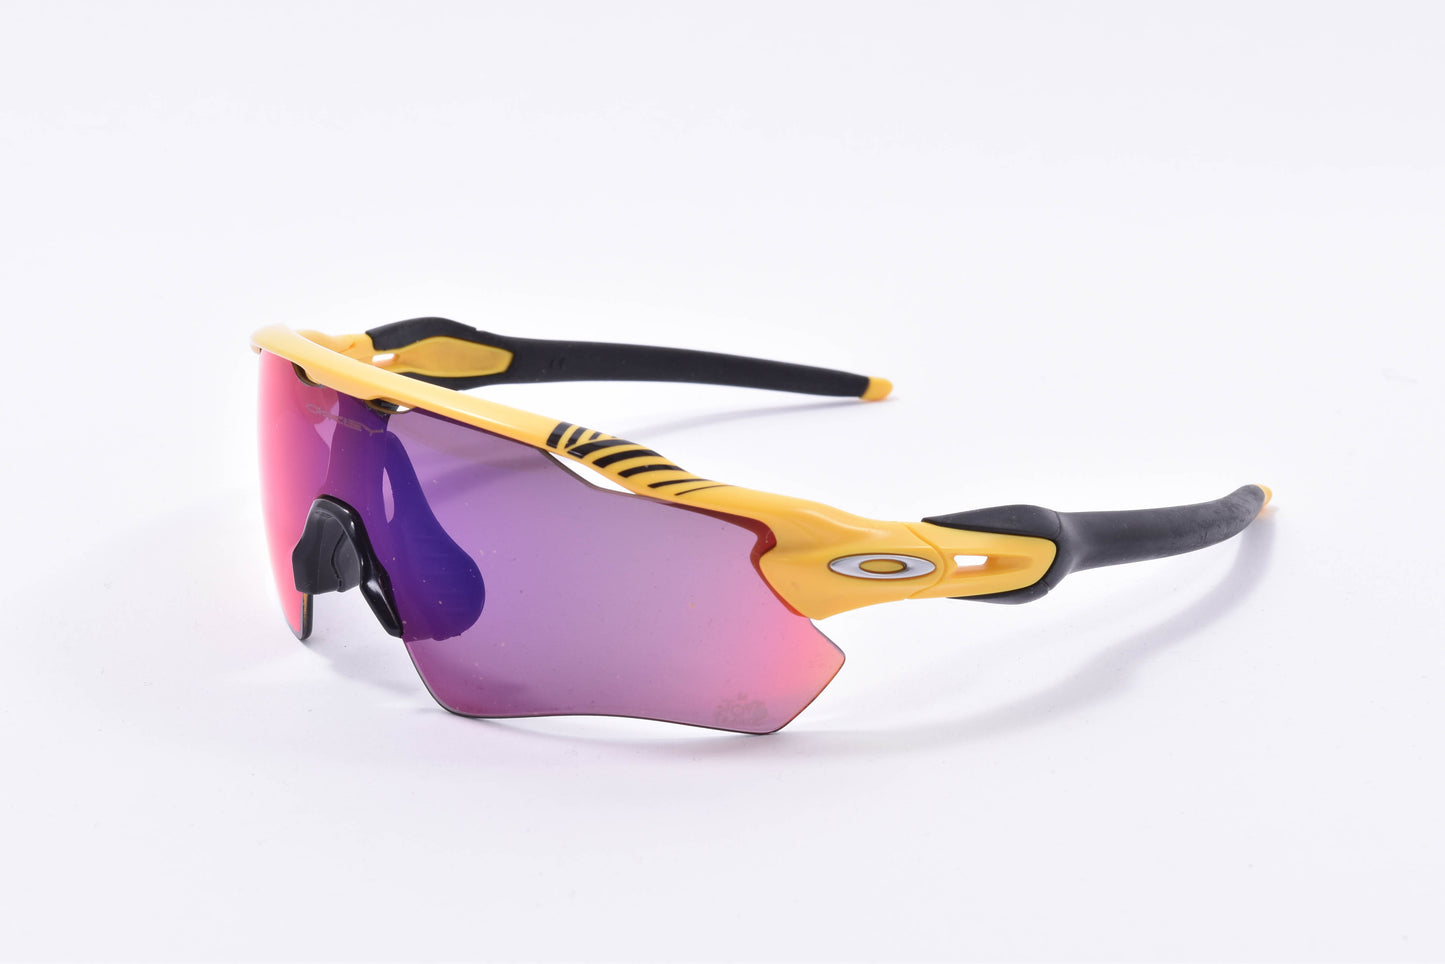 USED Oakley Radar EV Path 2019 Tour De France Edition Yellow Sunglasses